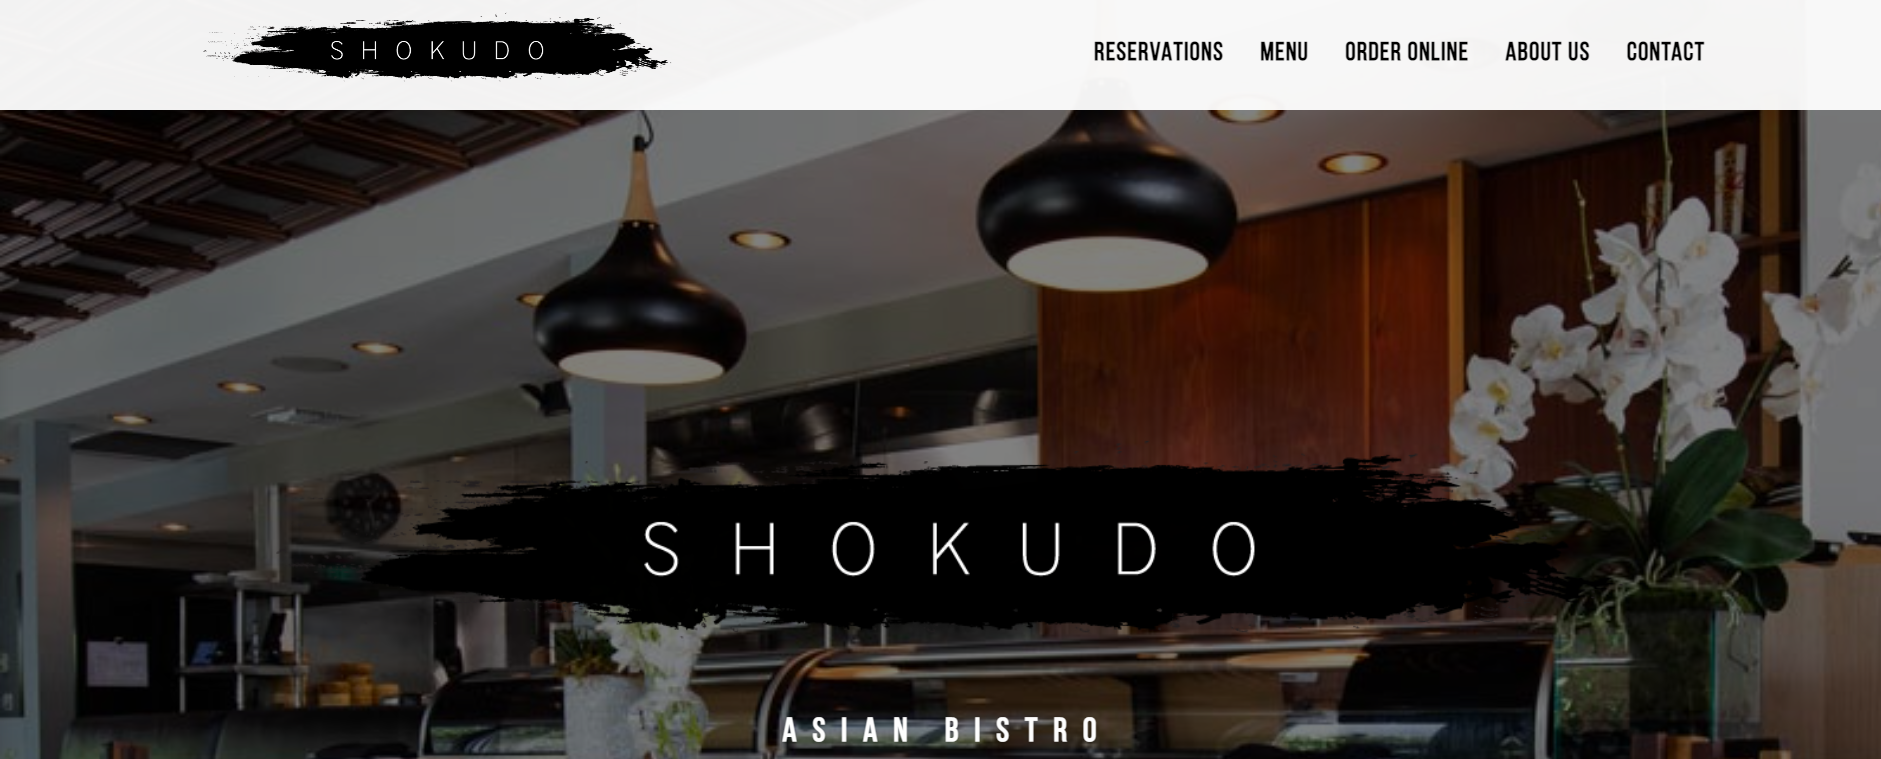 Shokudo Miami Sushi Restaurant